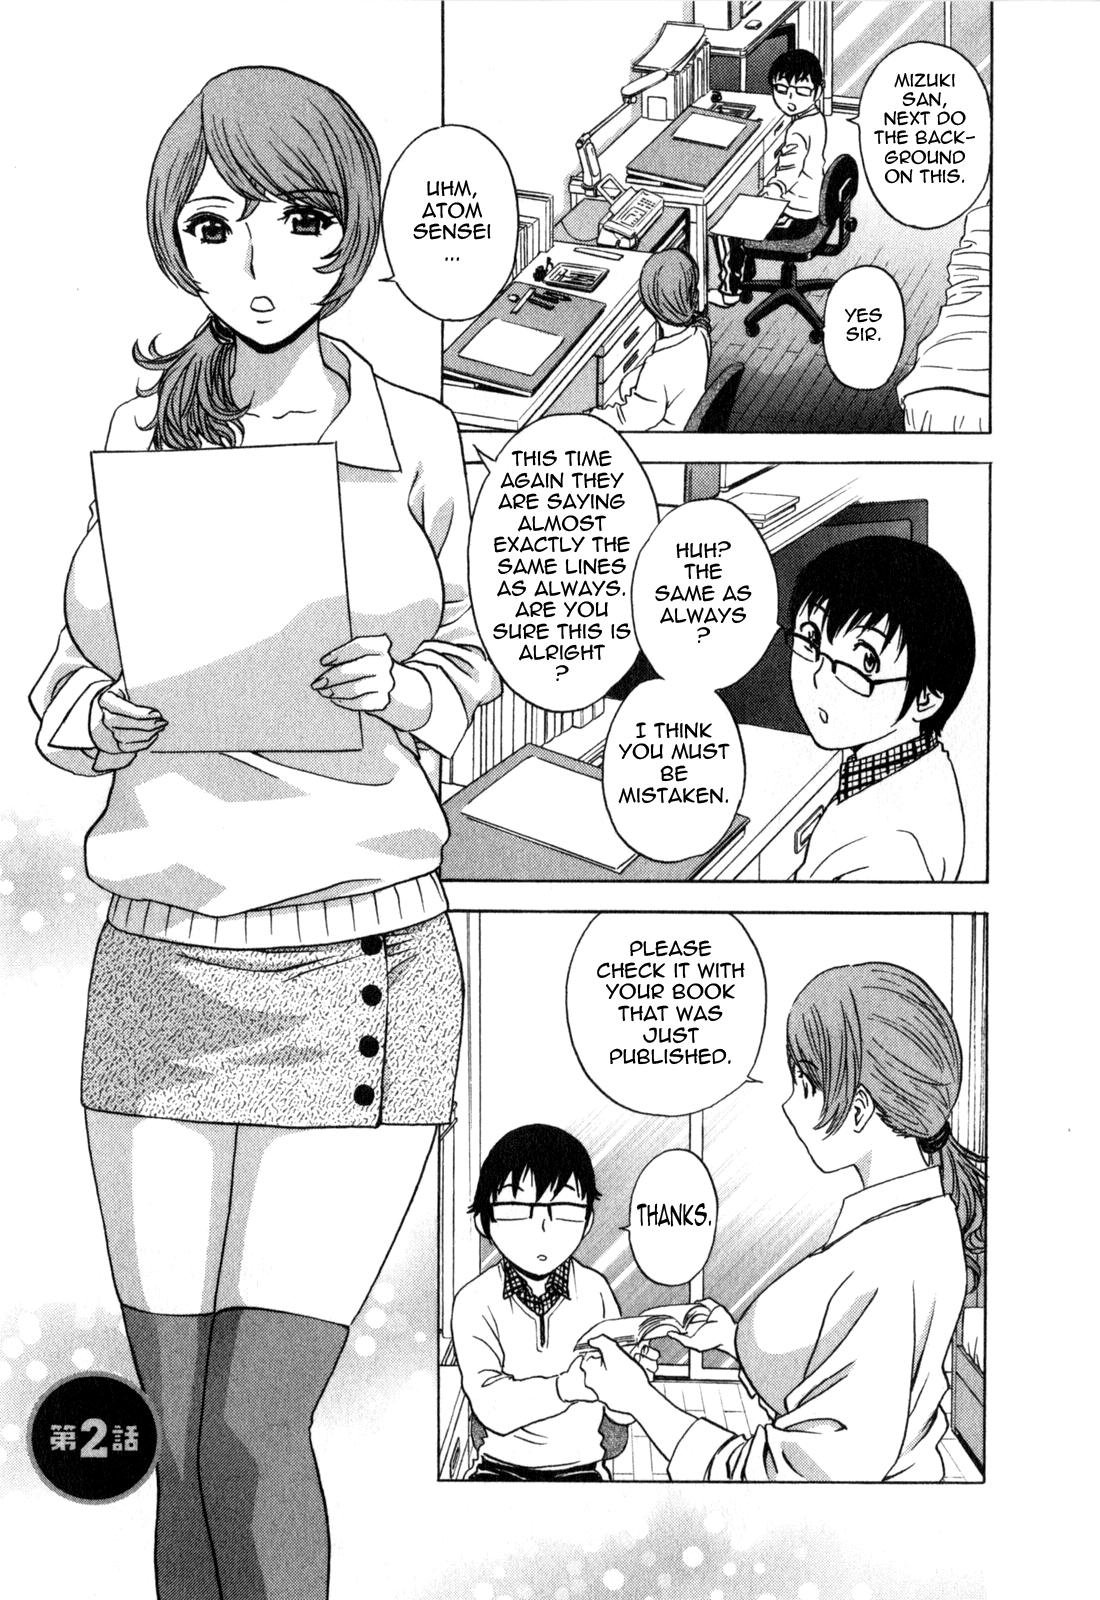 [Hidemaru] Life with Married Women Just Like a Manga 3 - Ch. 1-2 [English] {Tadanohito} 27